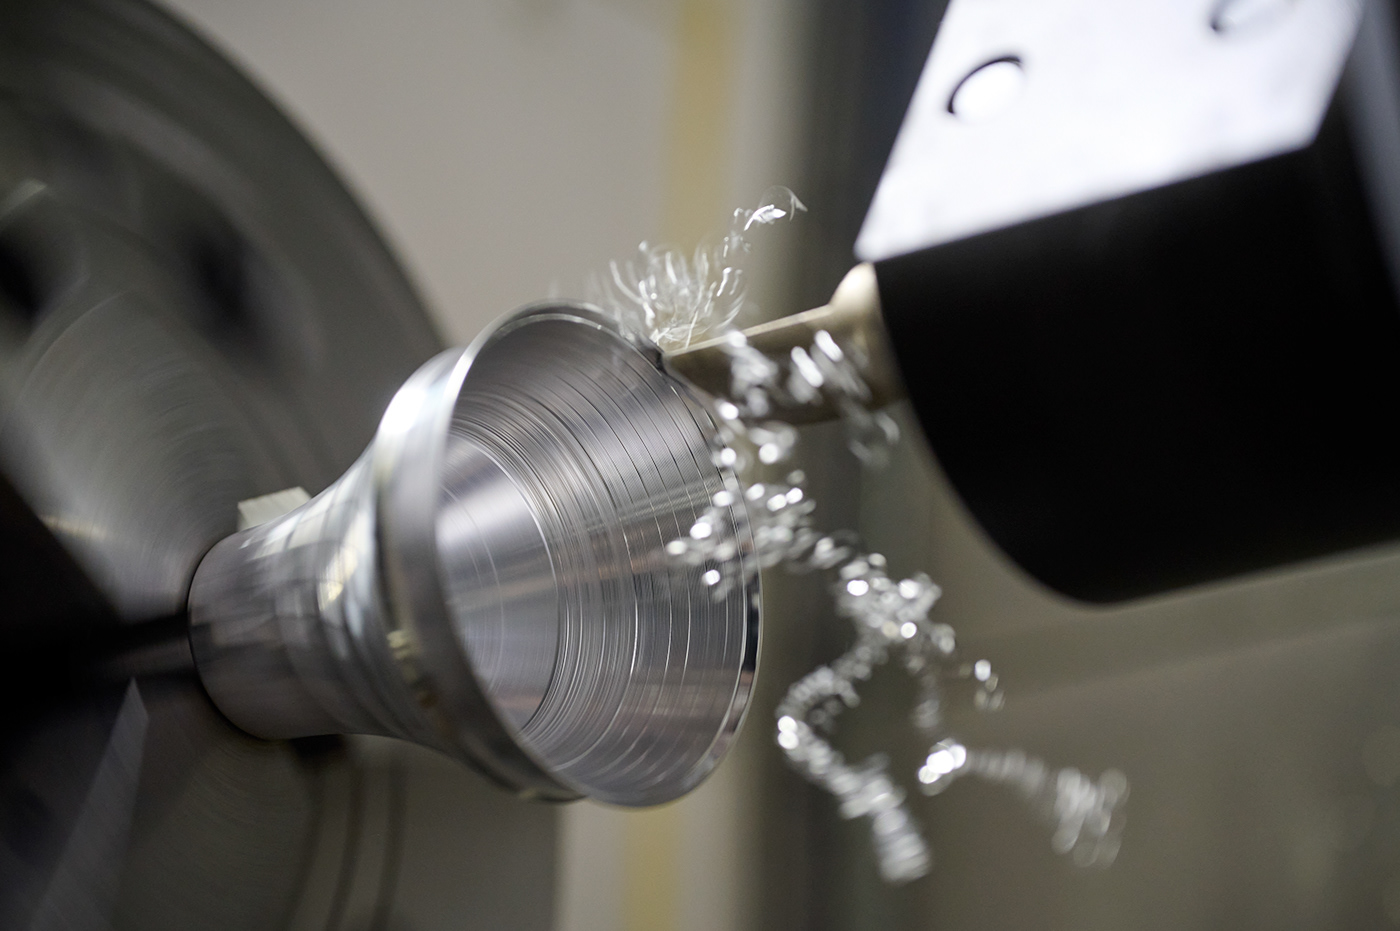 camera craft cup engraving factory industrial design  metal product design  Sake tableware